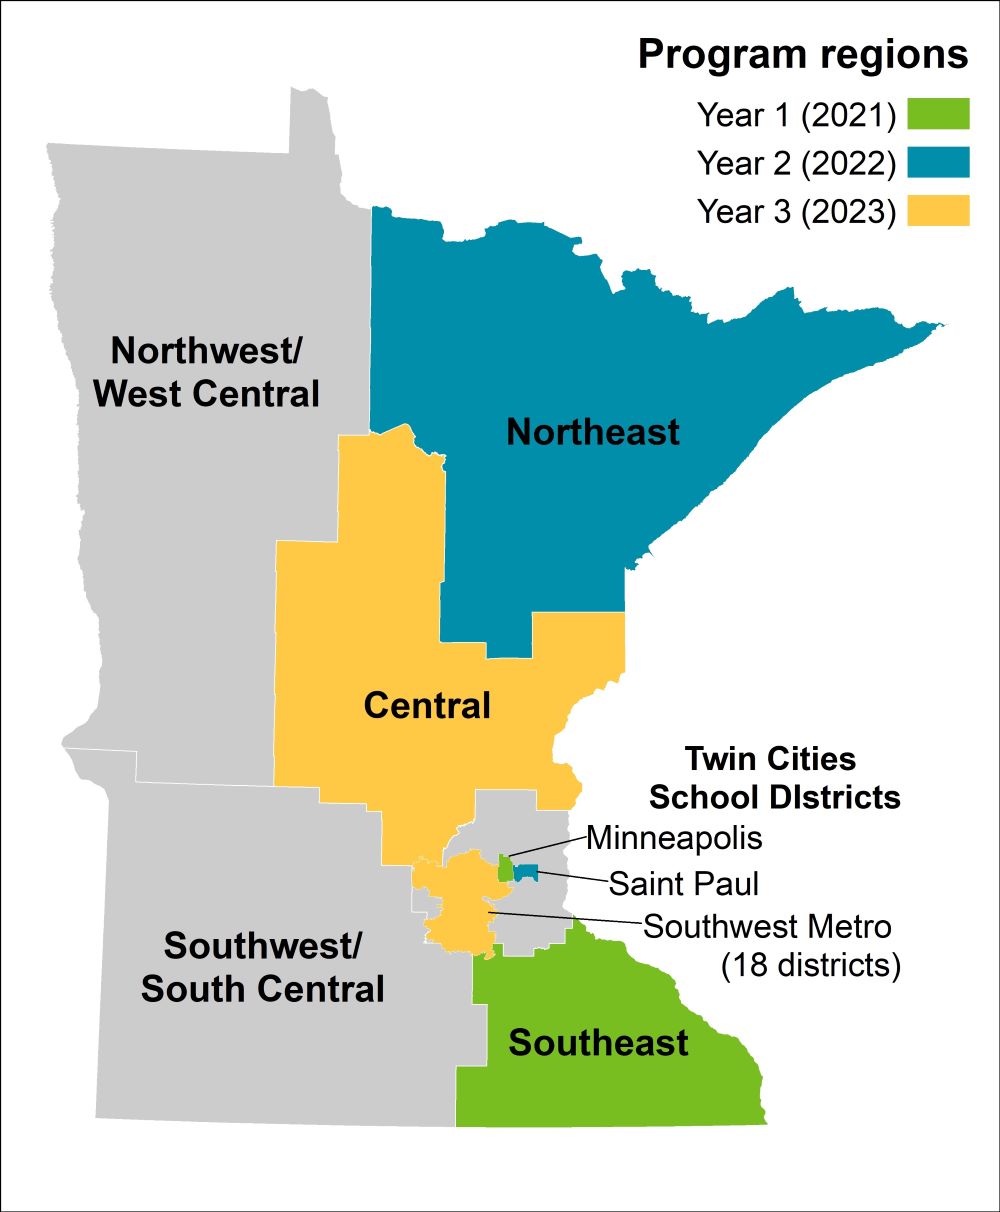 Healthy Kids program regions: Year 1 (2021) Minneapolis, Southeast MN; Year 2 (2022) Saint Paul, Northeast MN; Year 3 (2023) Central MN